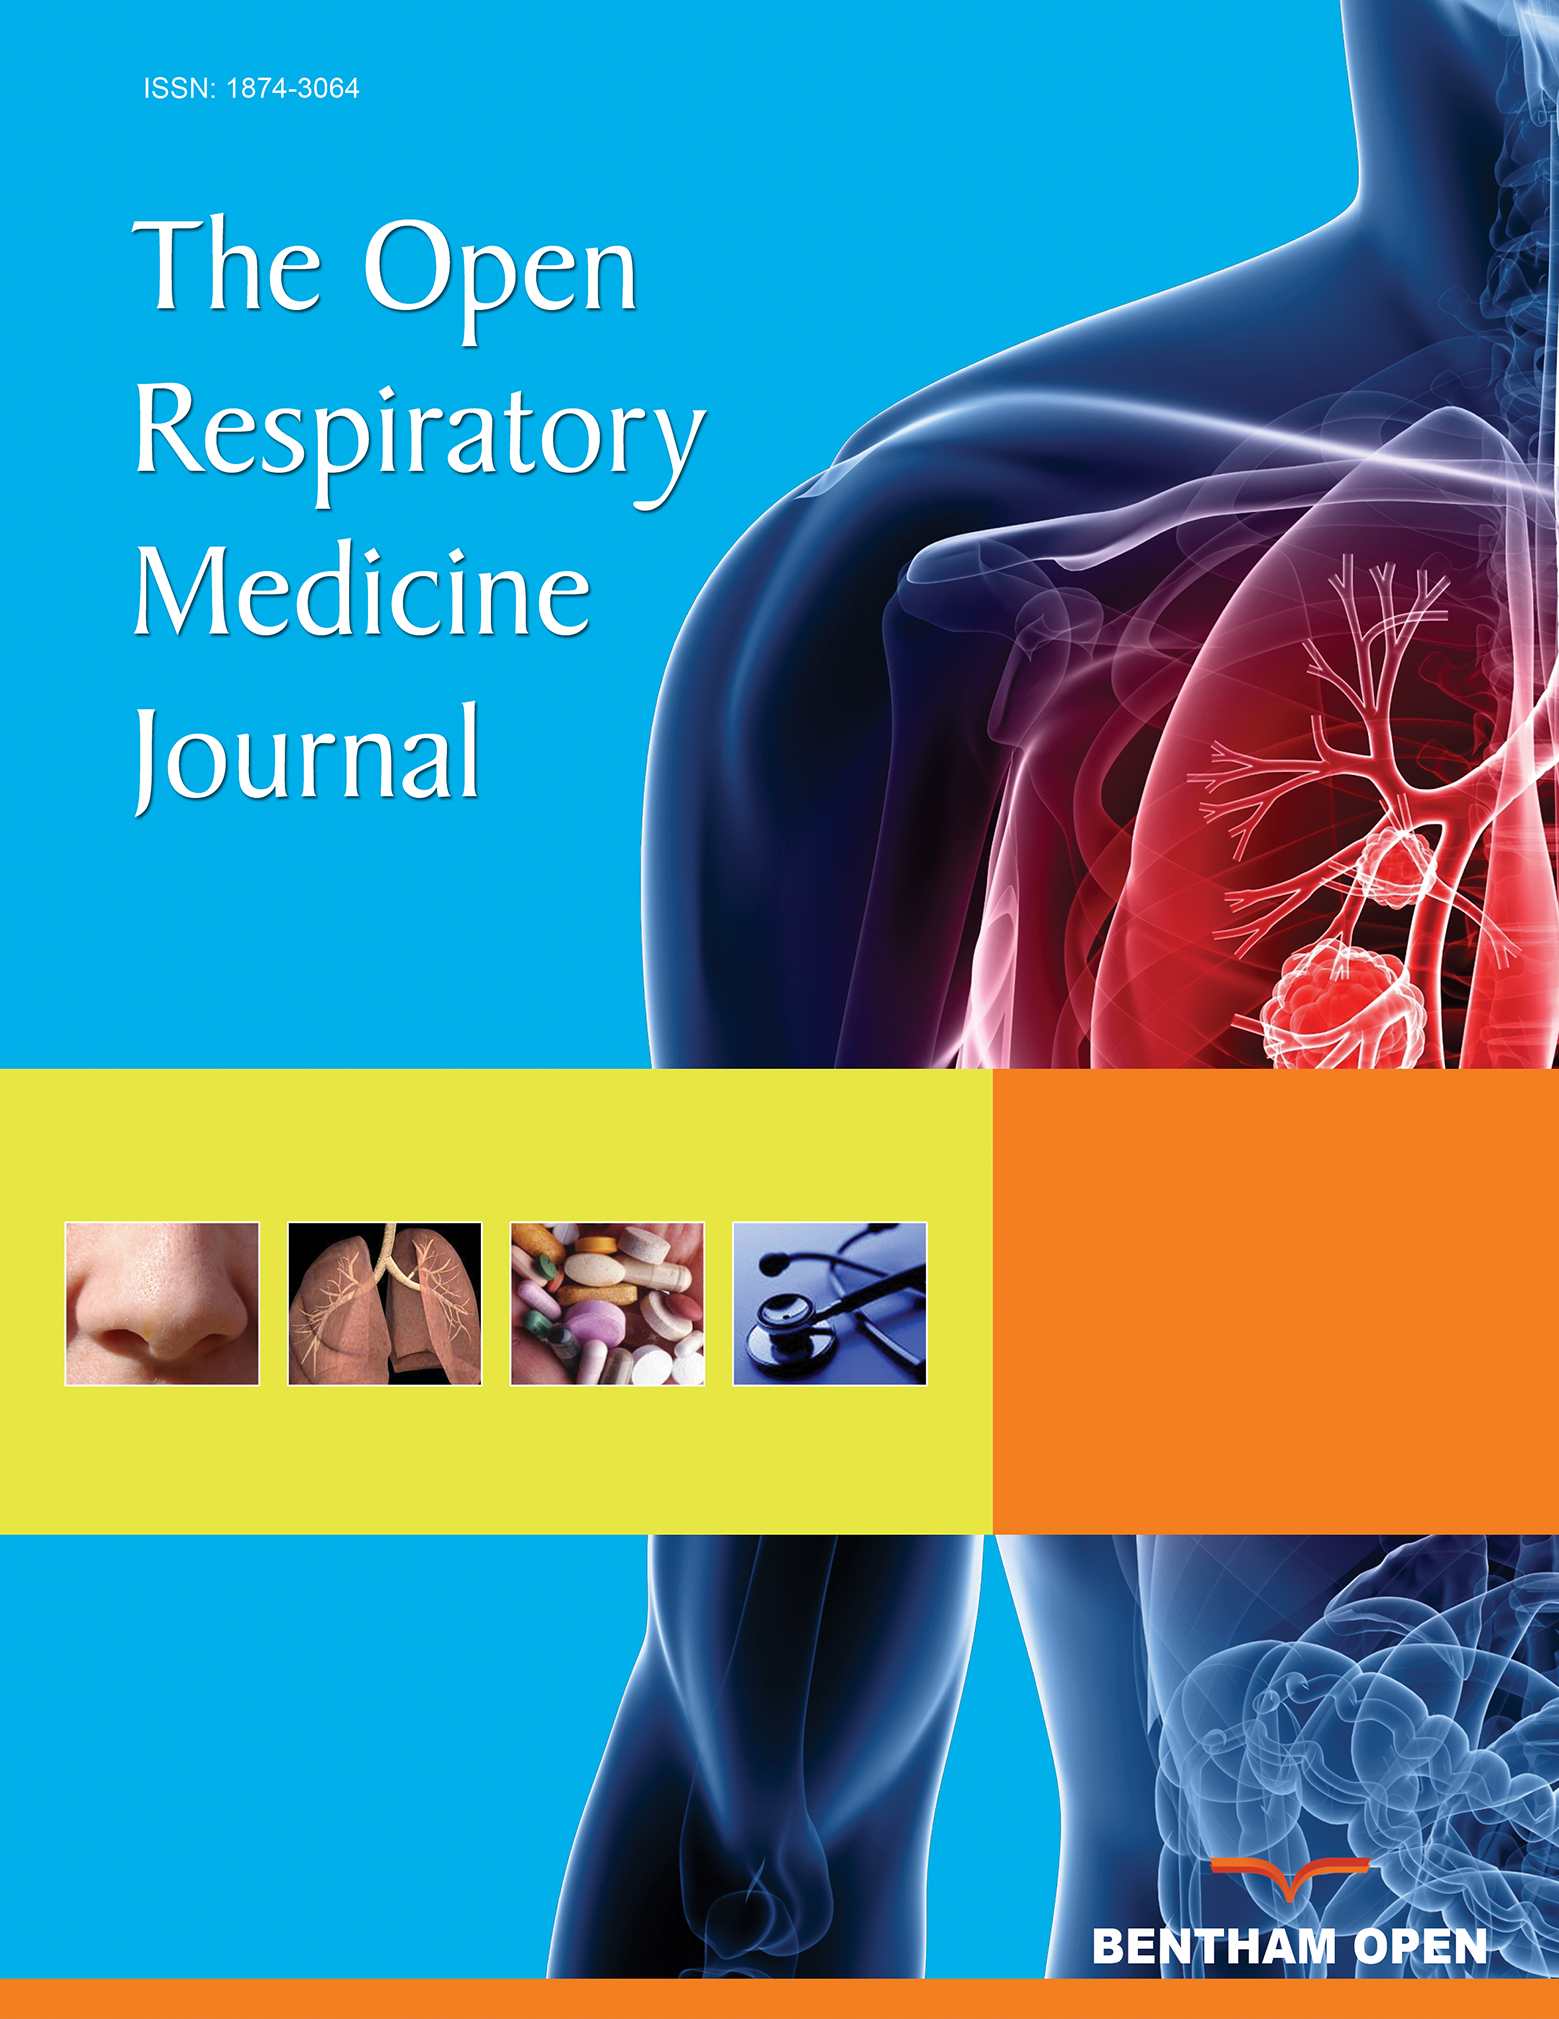 The Open Respiratory Medicine Journal